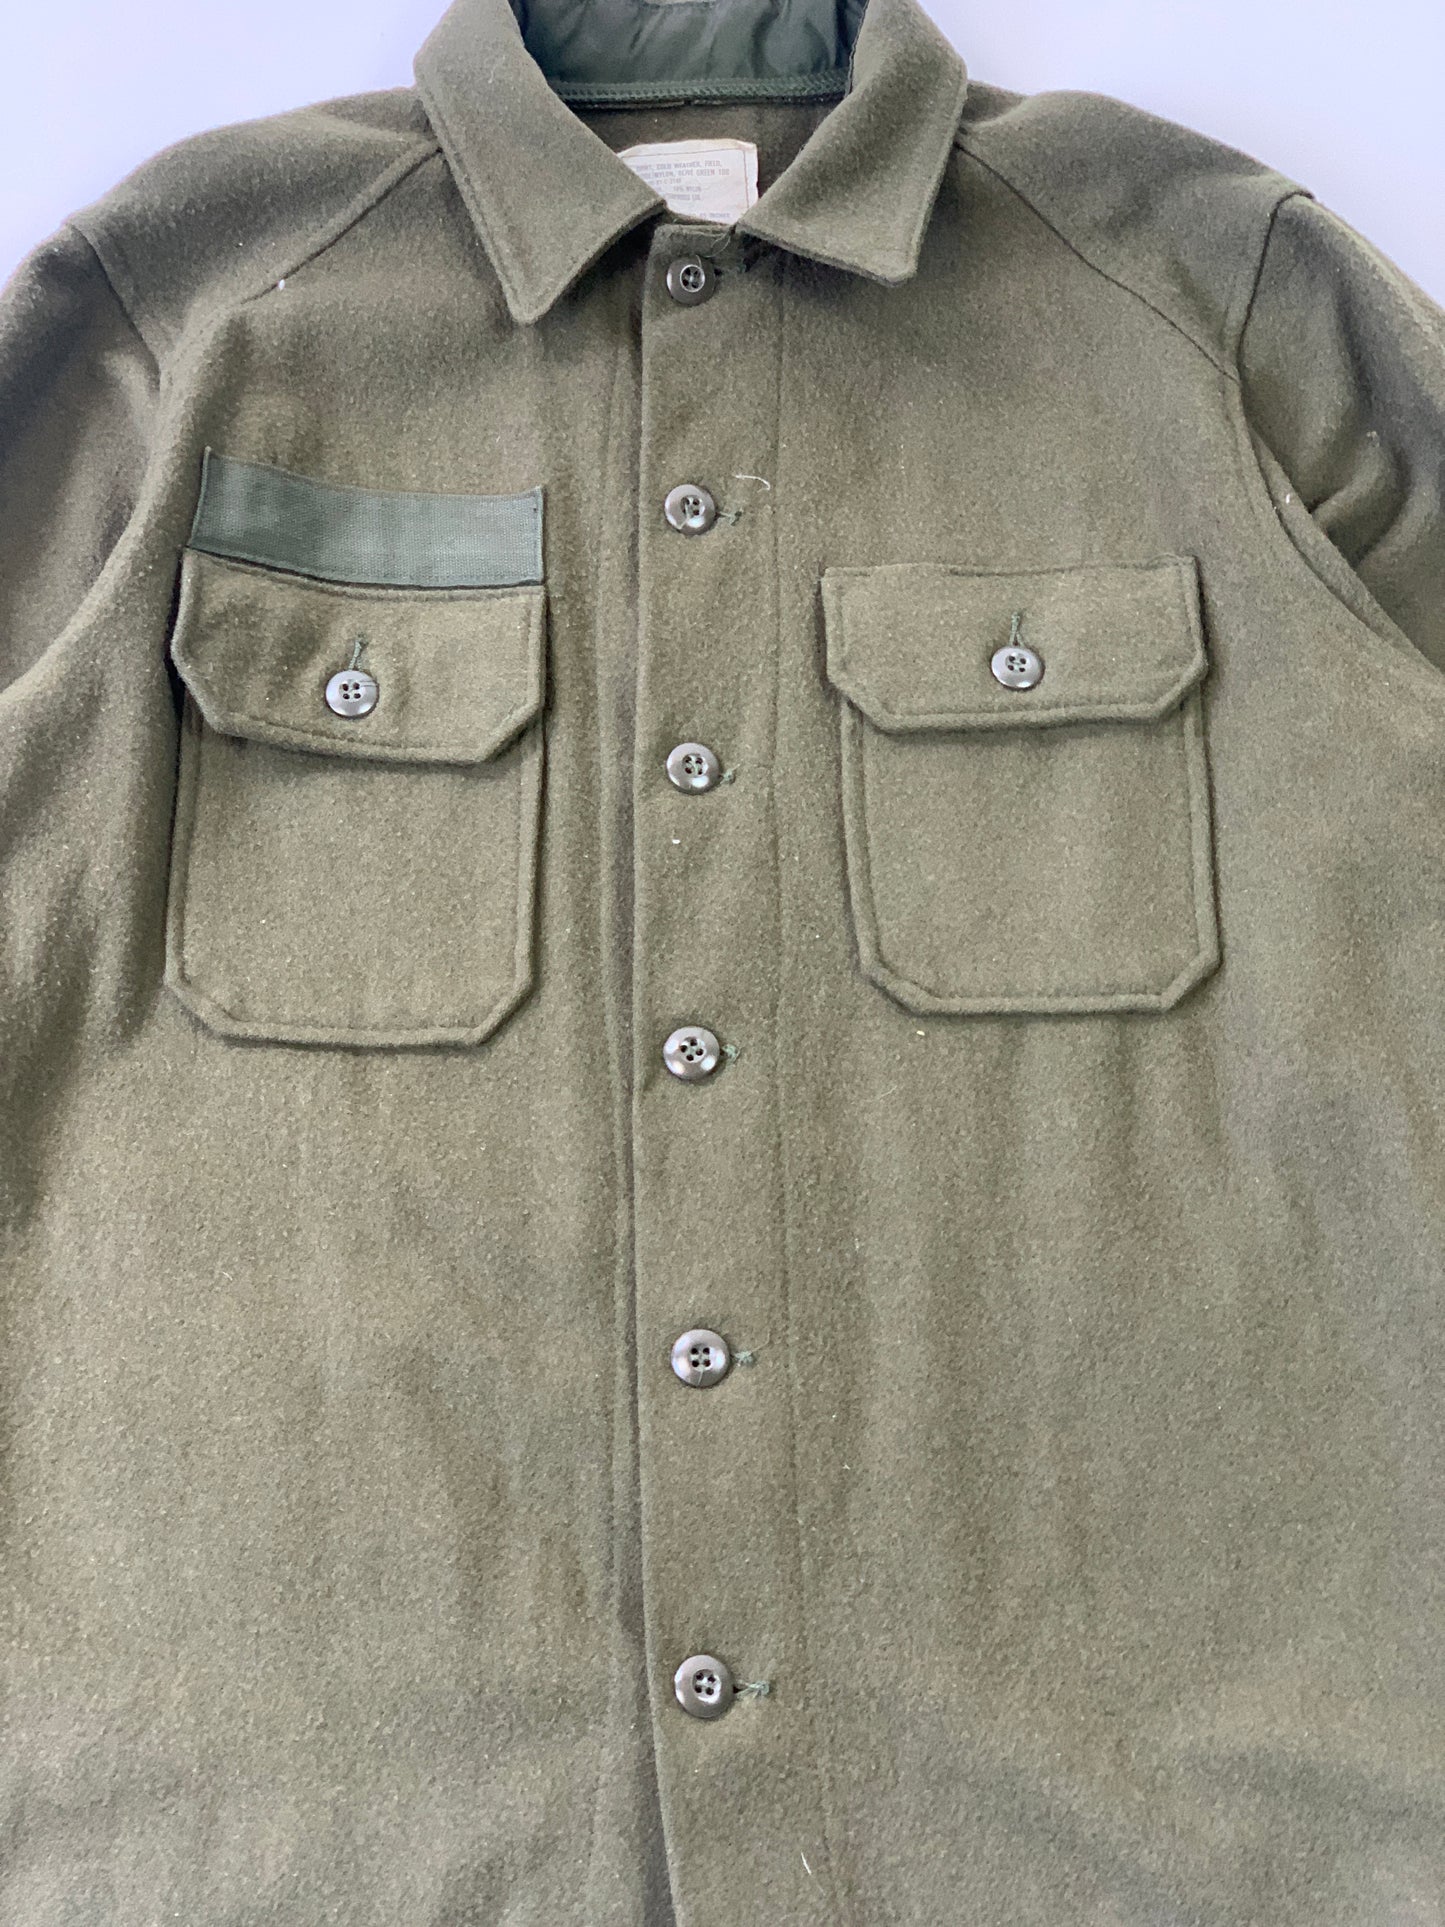 Army Vintage Shirt